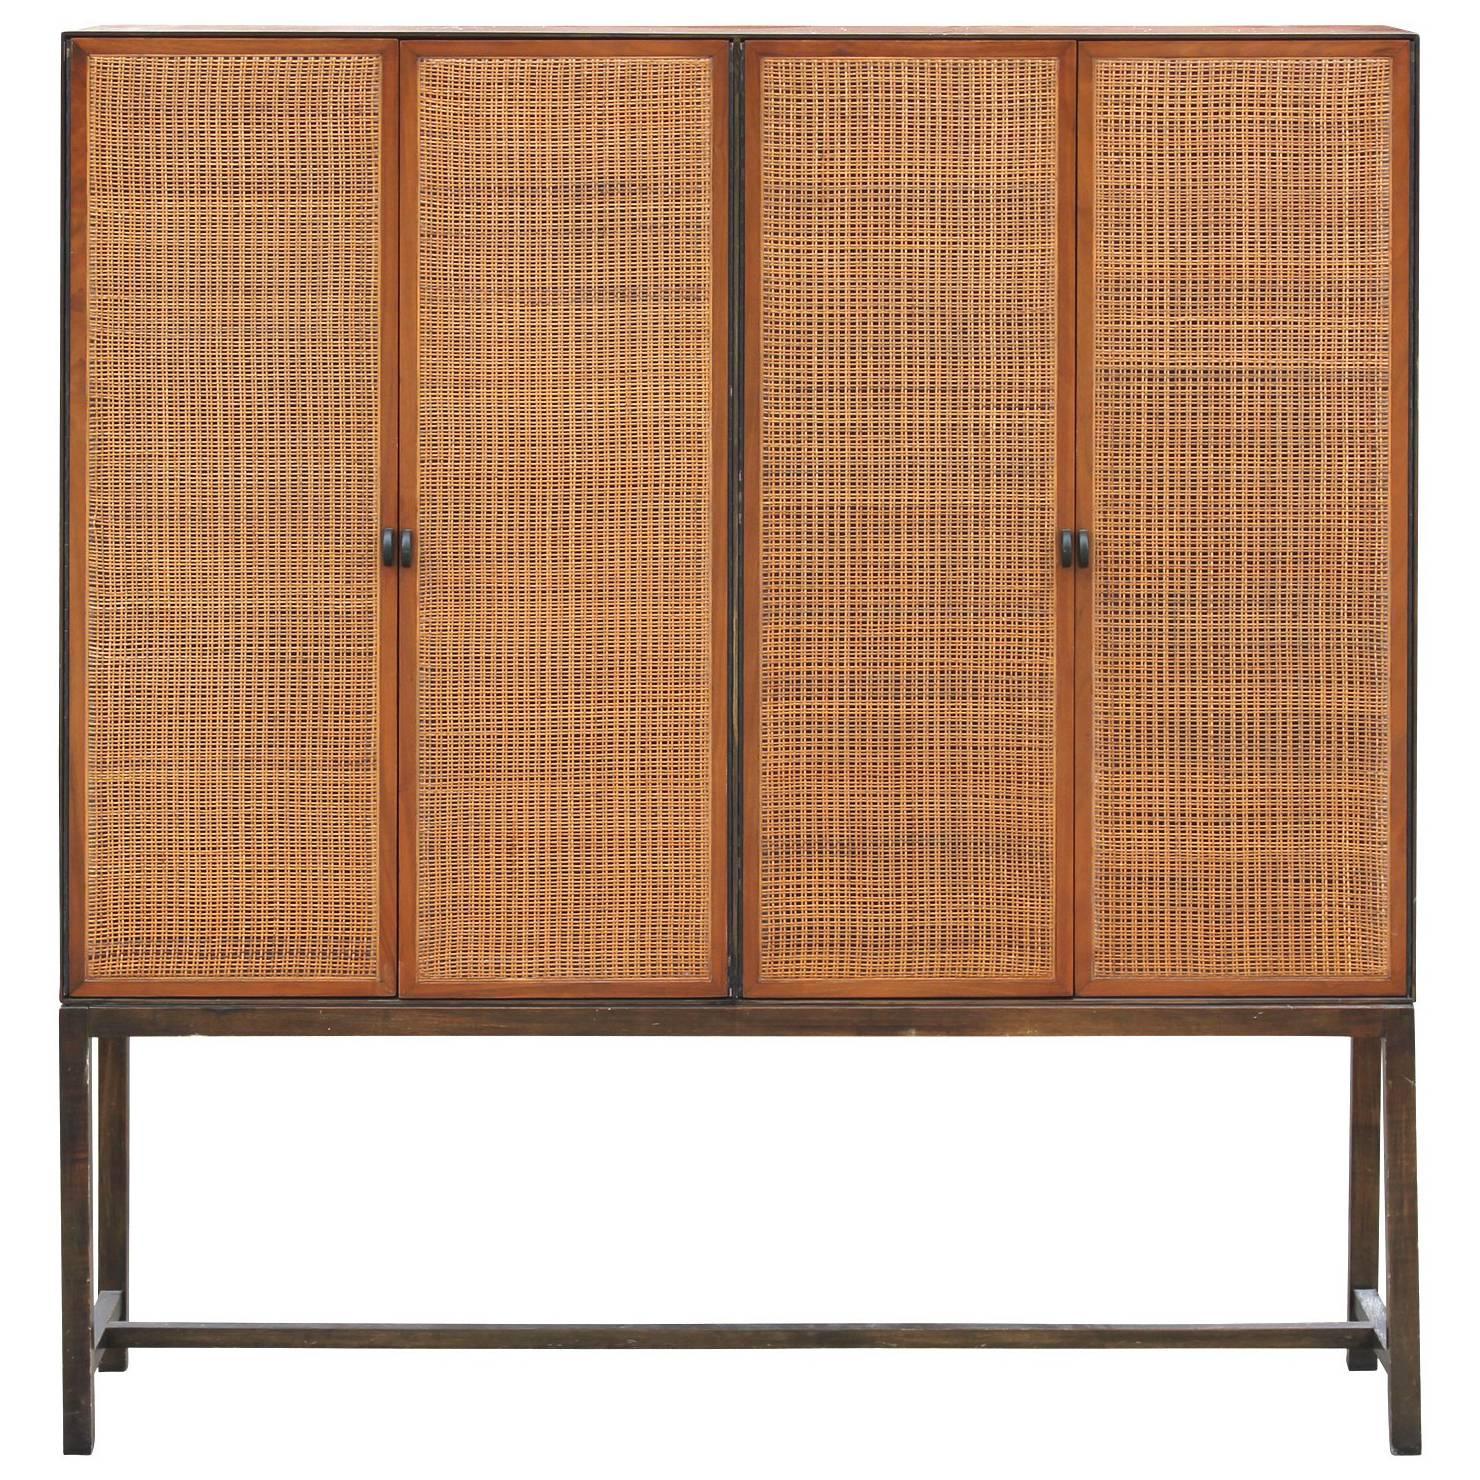 Impressive Modern Directional / Calvin Furniture Cane Cabinet or Wardrobe